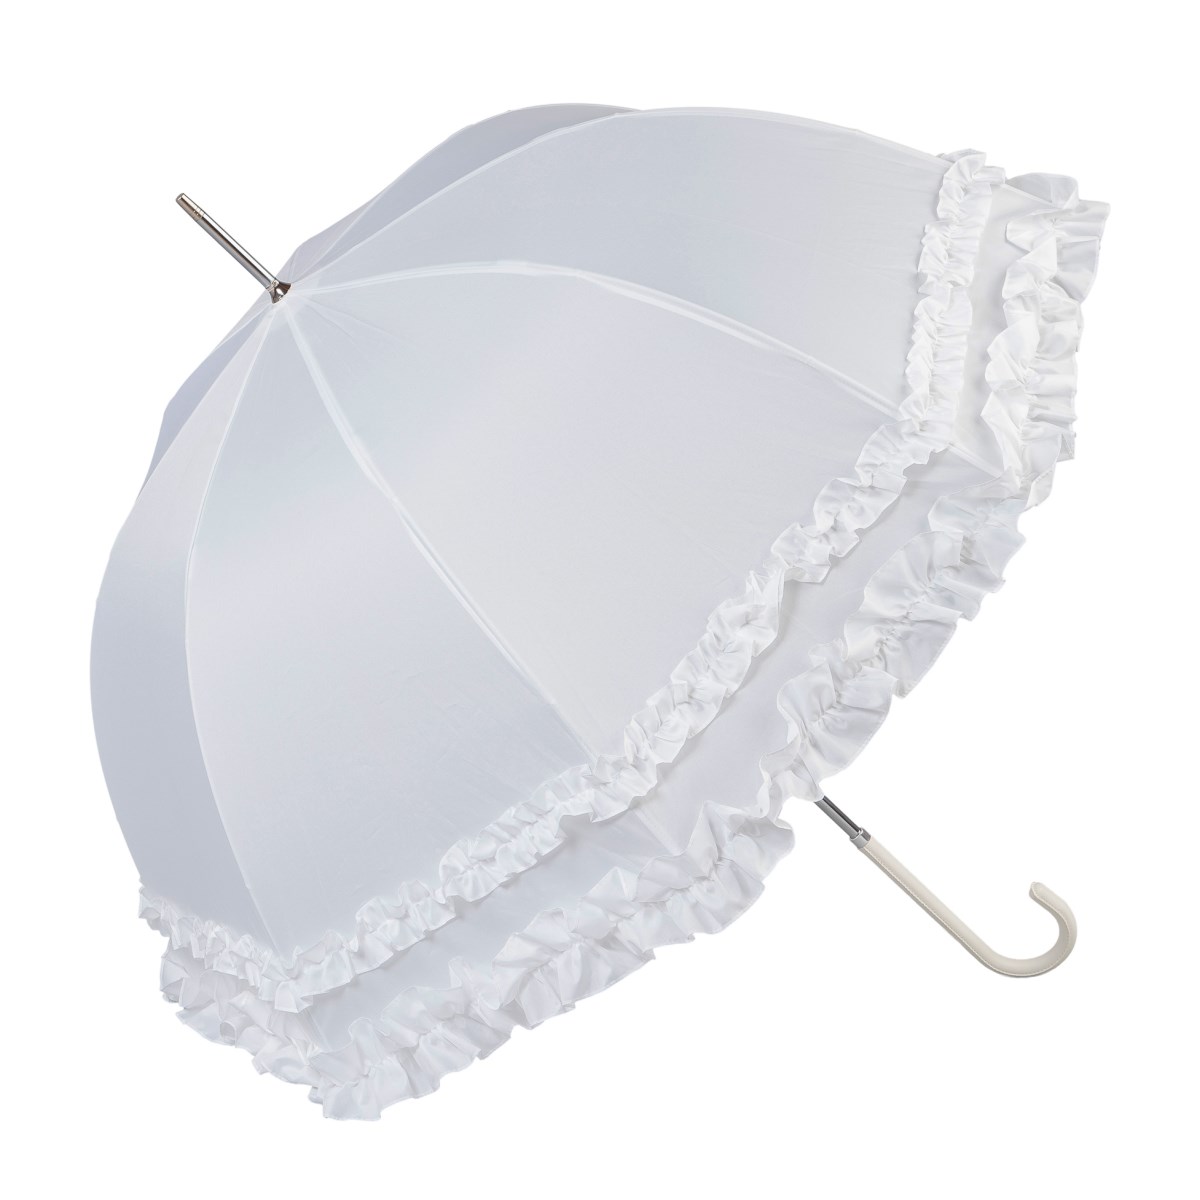 Double Frilled White Umbrella Open Angled